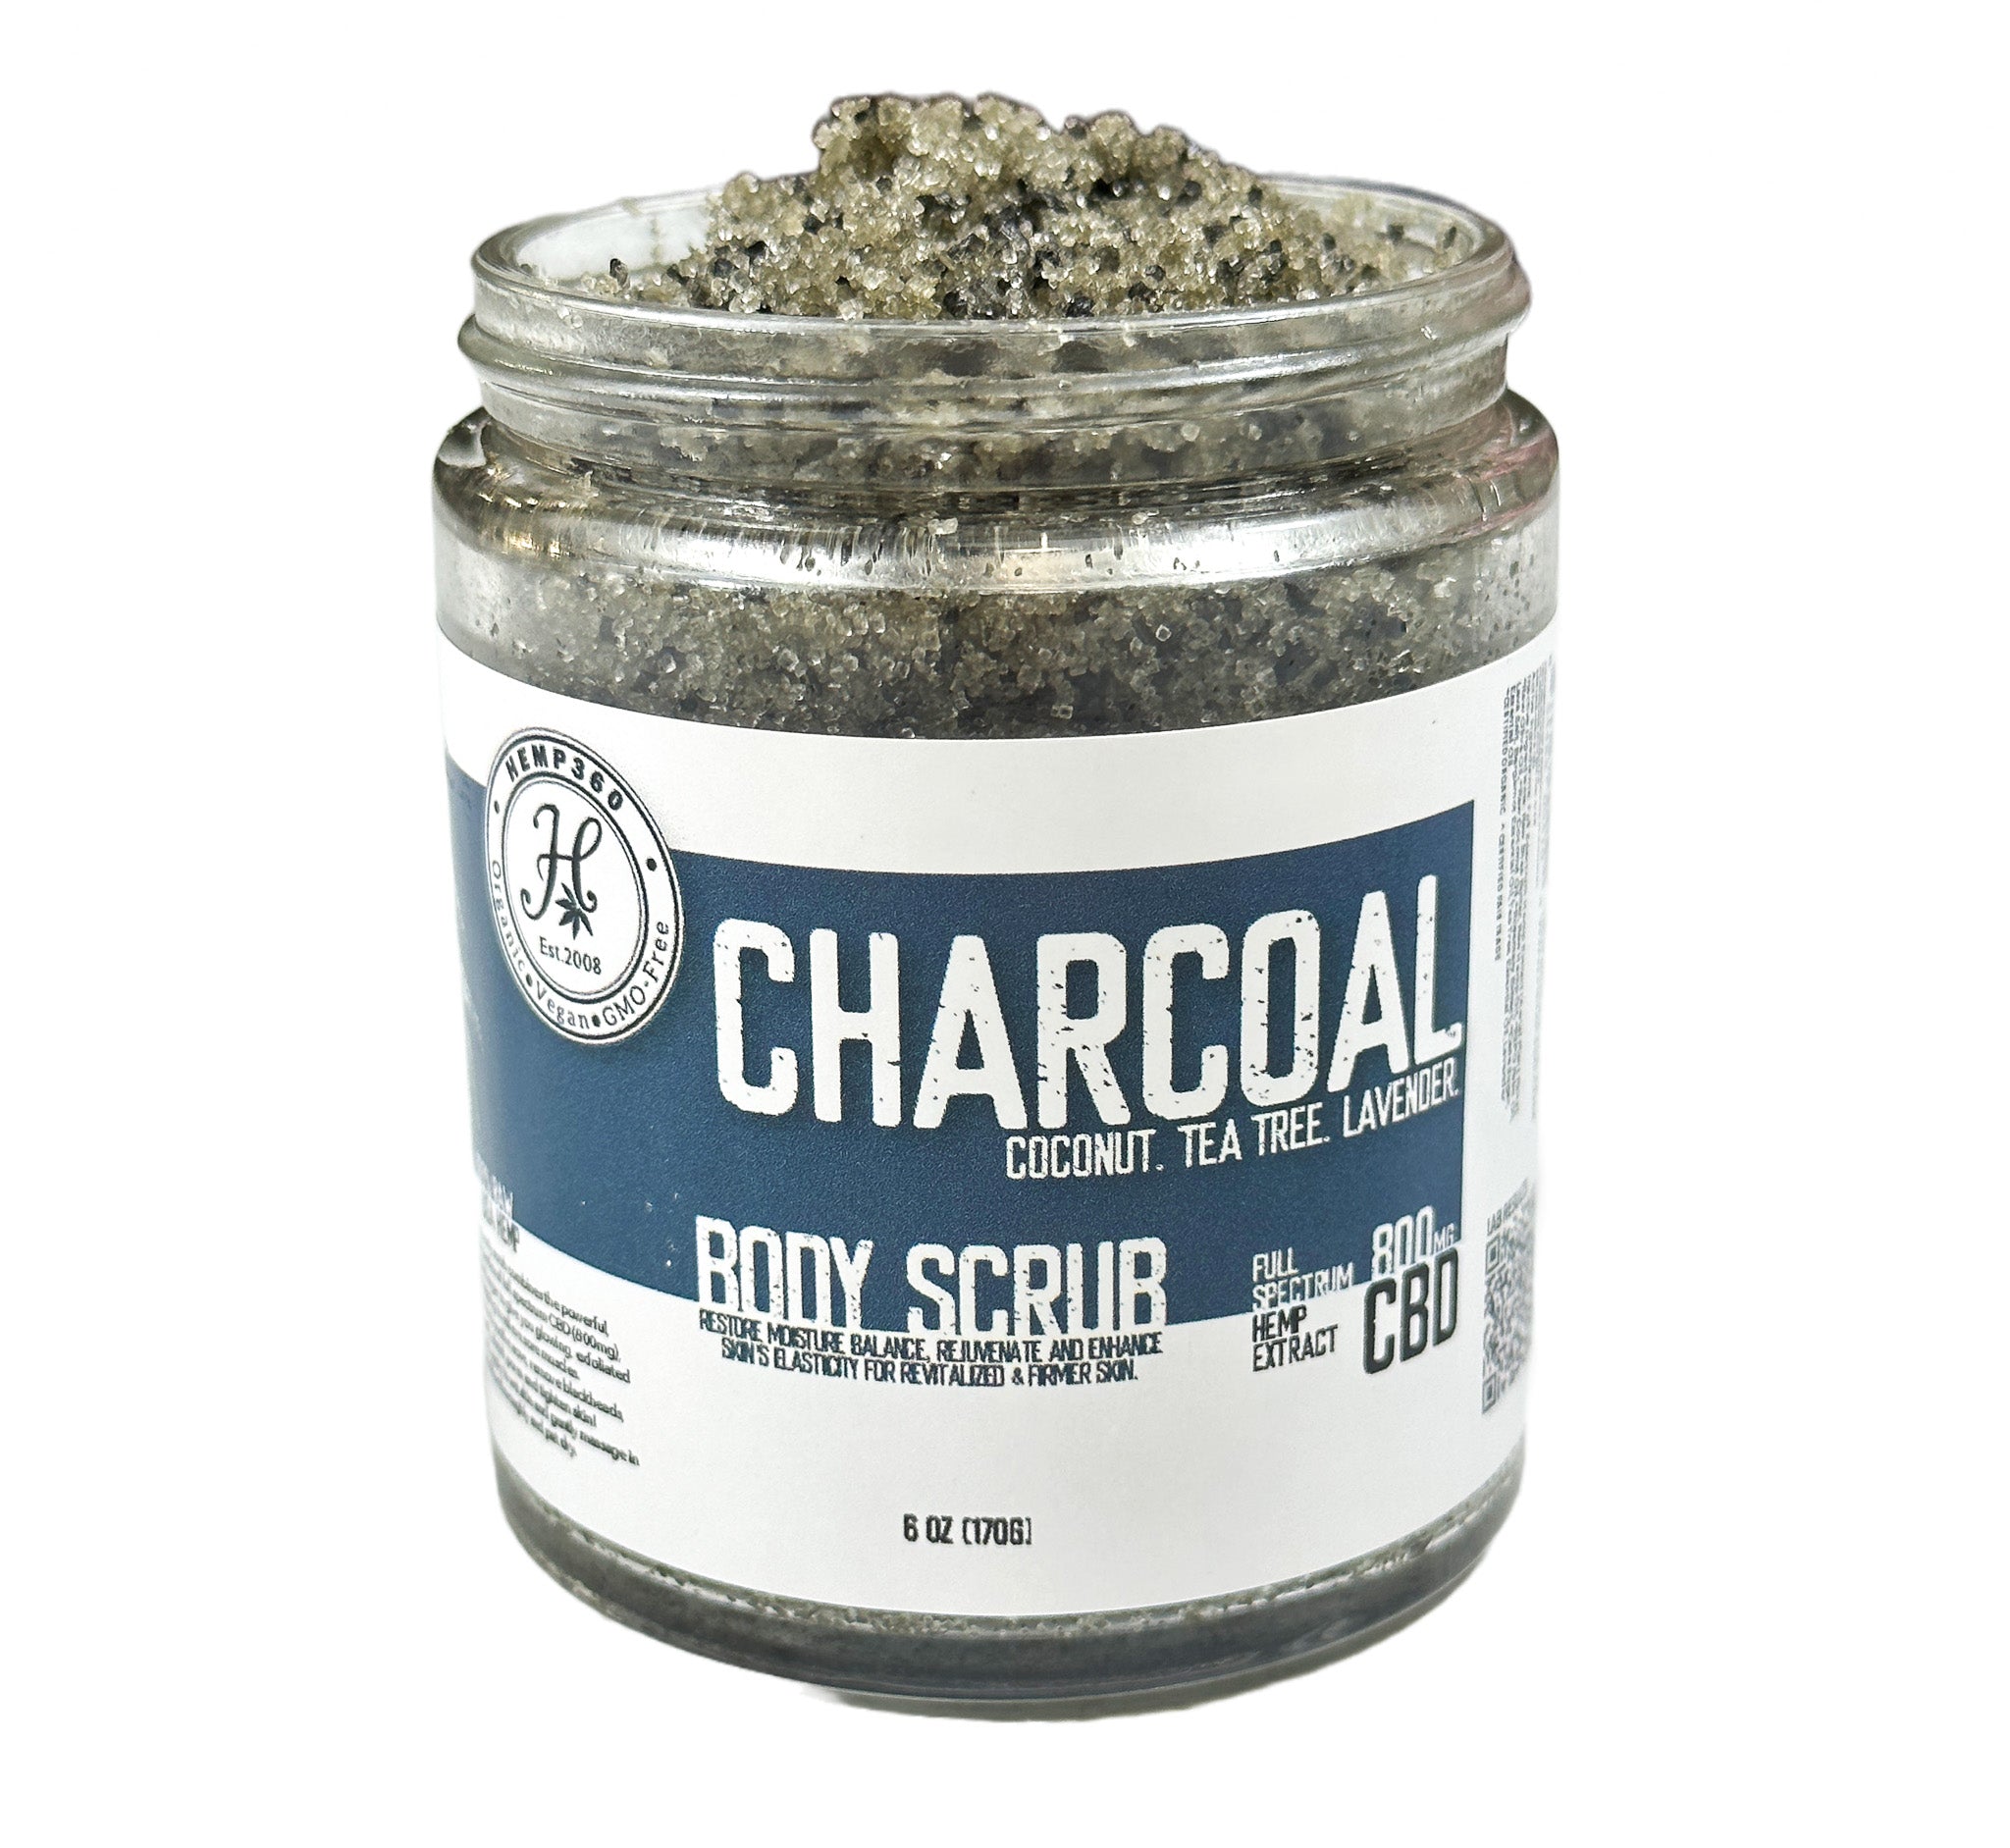 CBD Charcoal Body Scrub